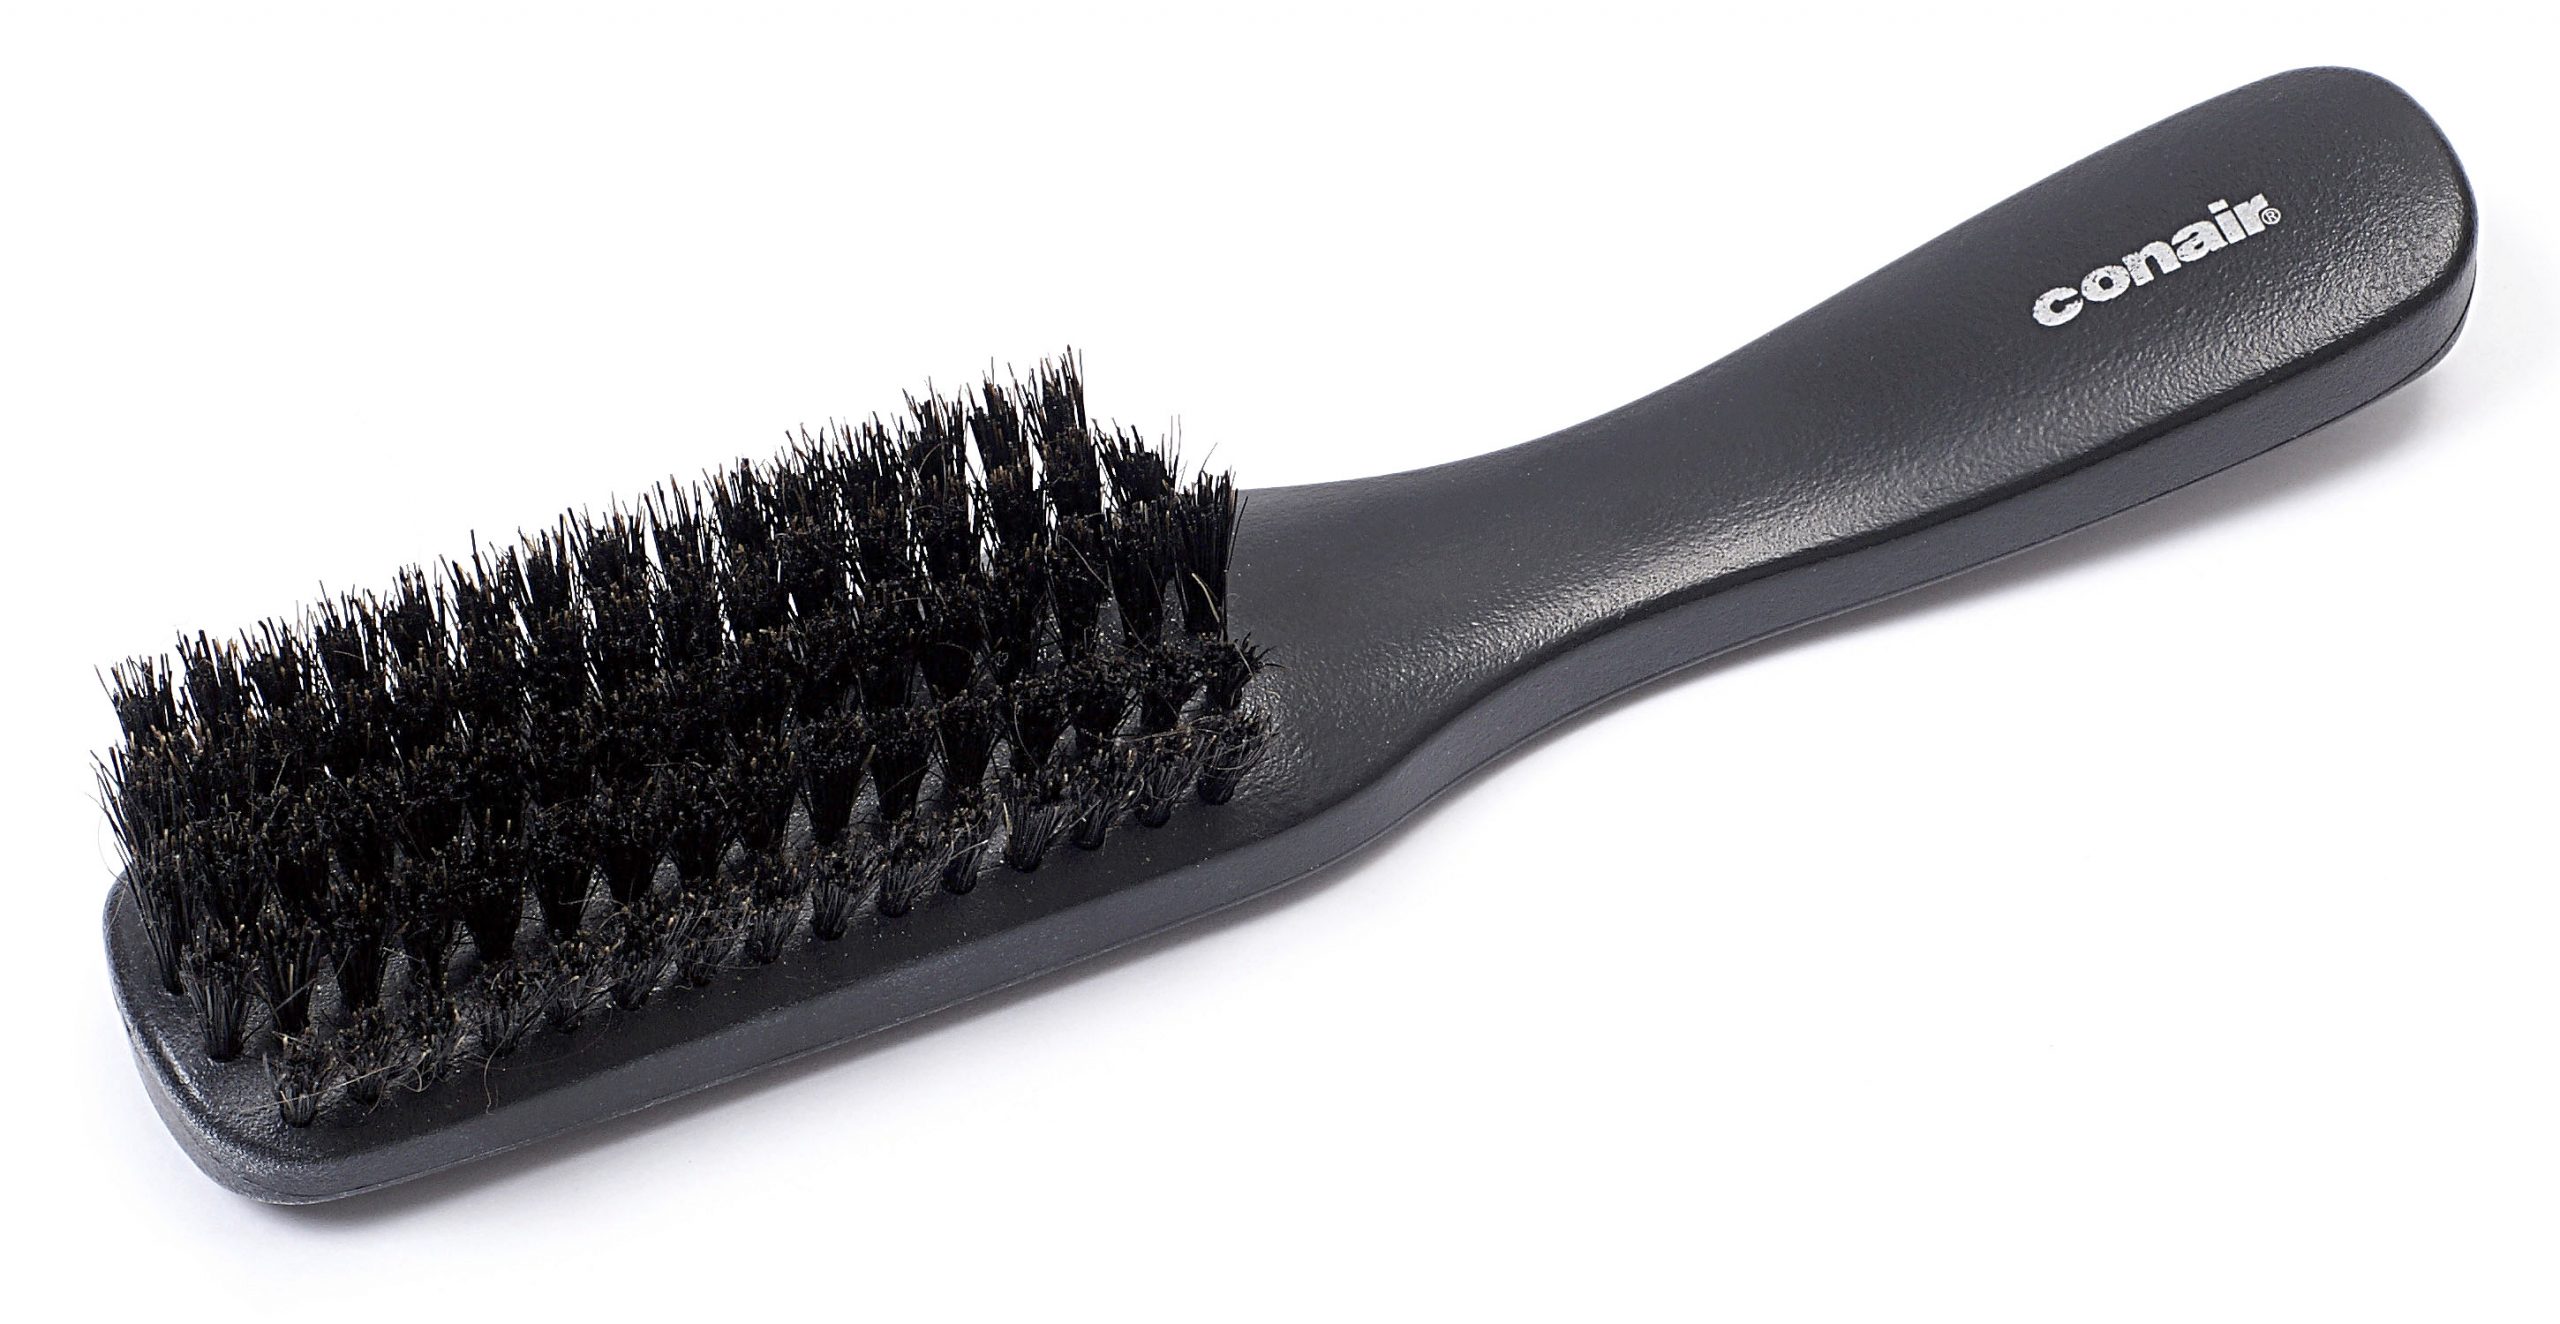 Choosing The Right Hair Brush